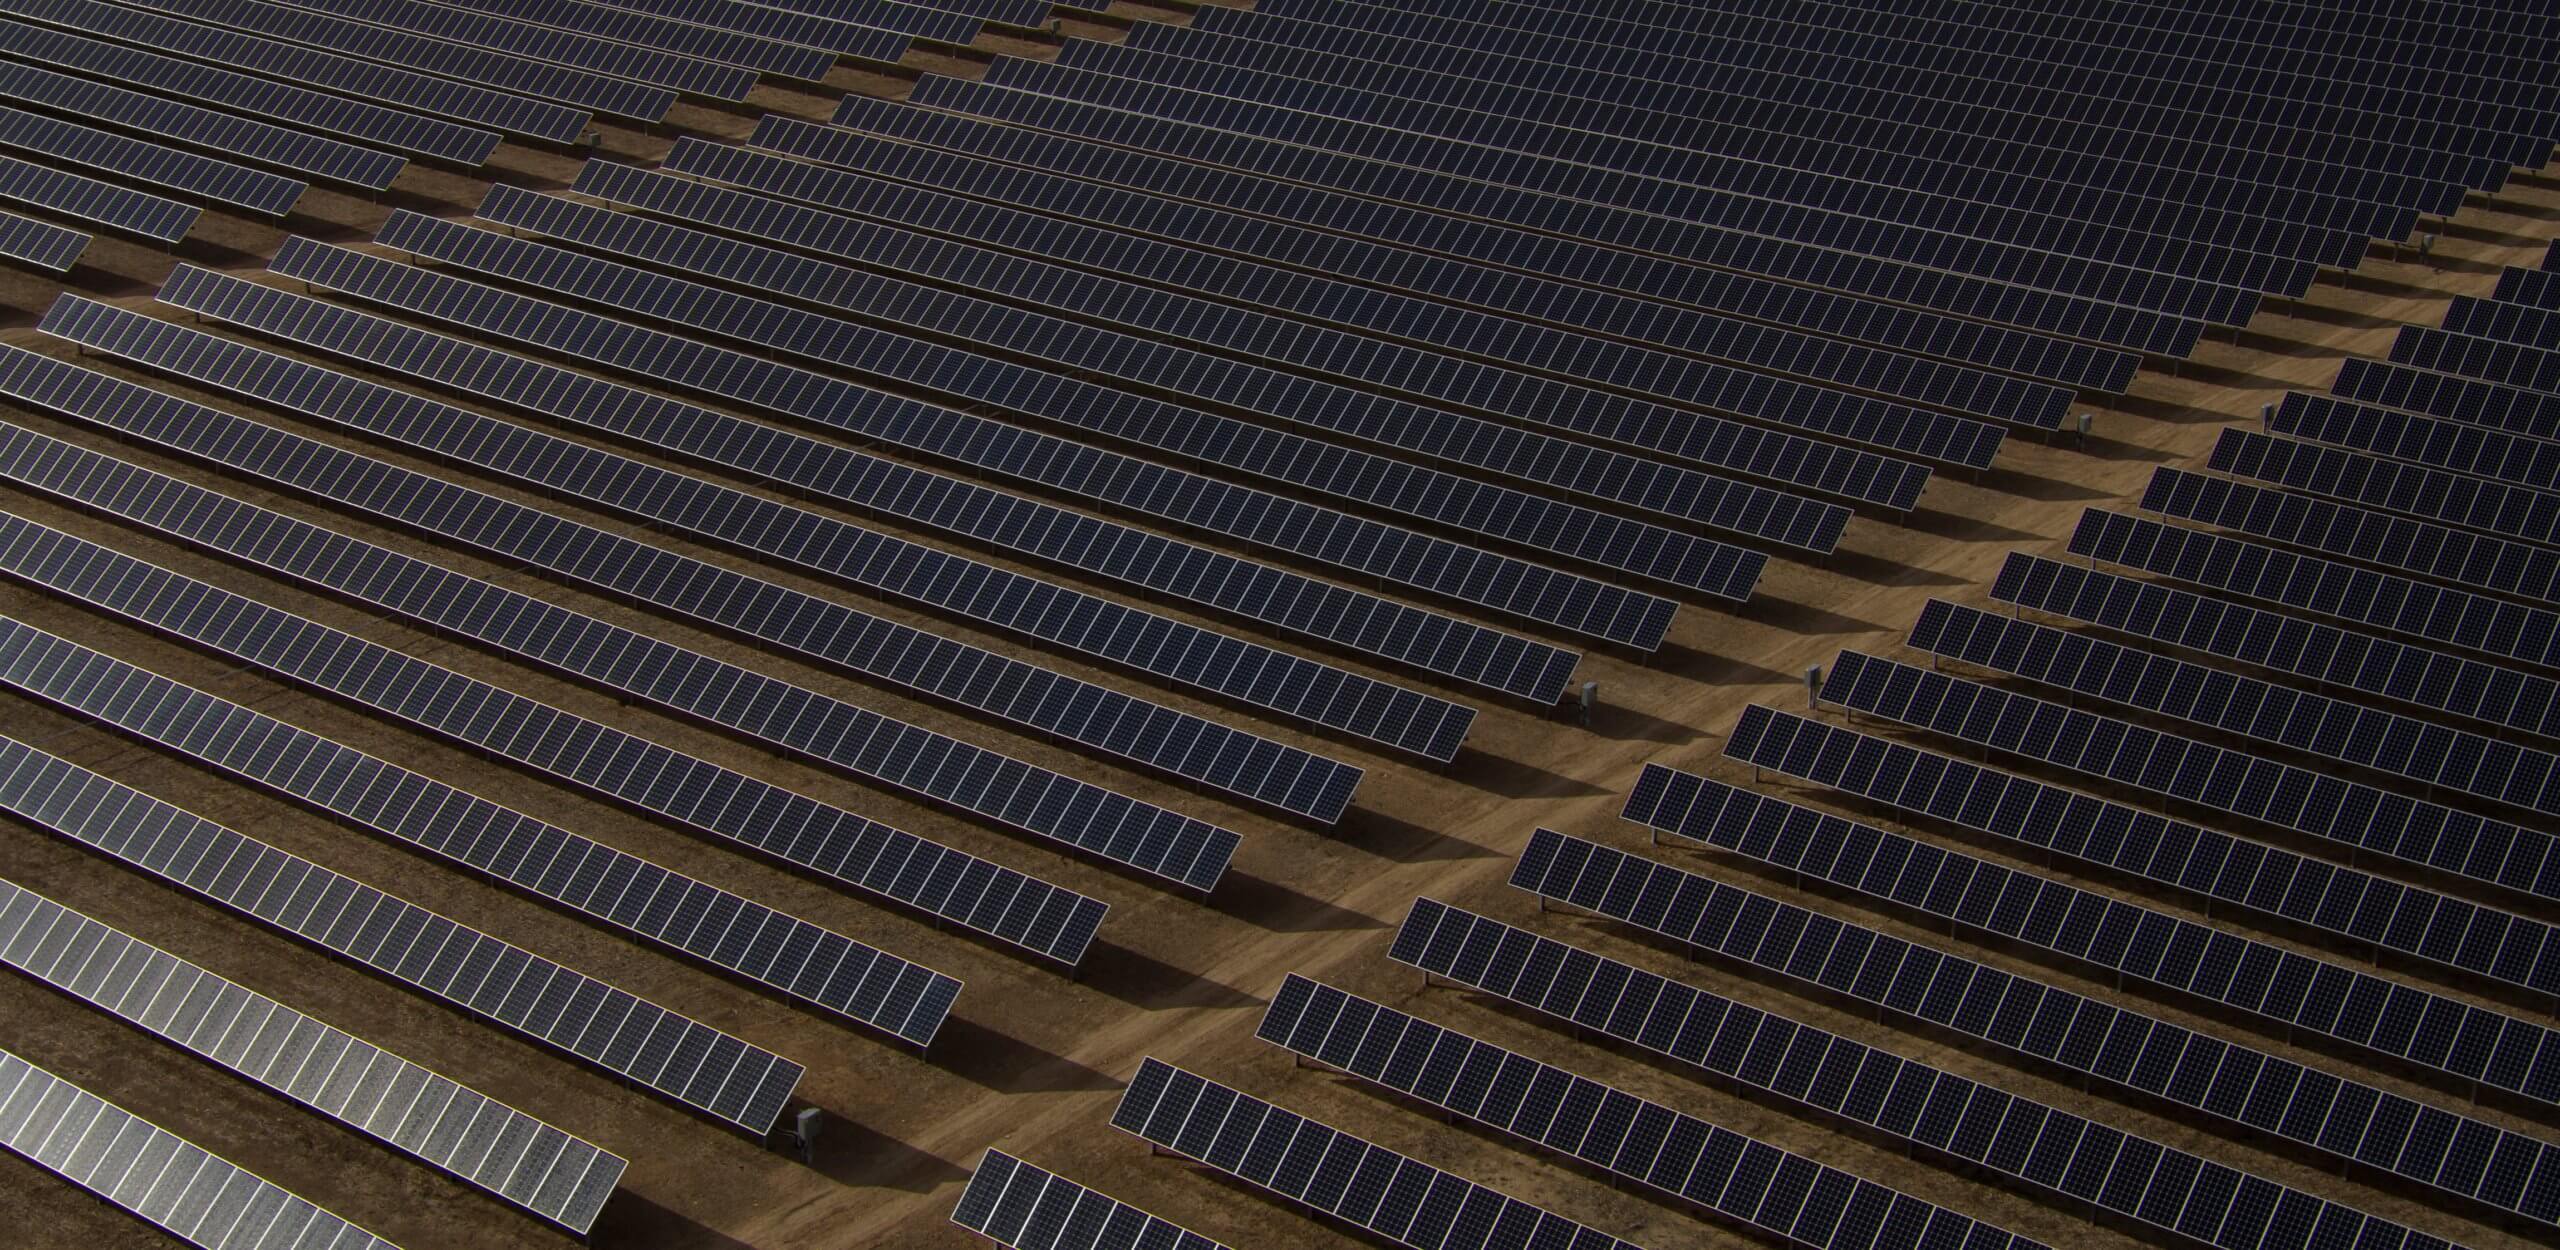 Neat rows of solar panels in Loveland, California.